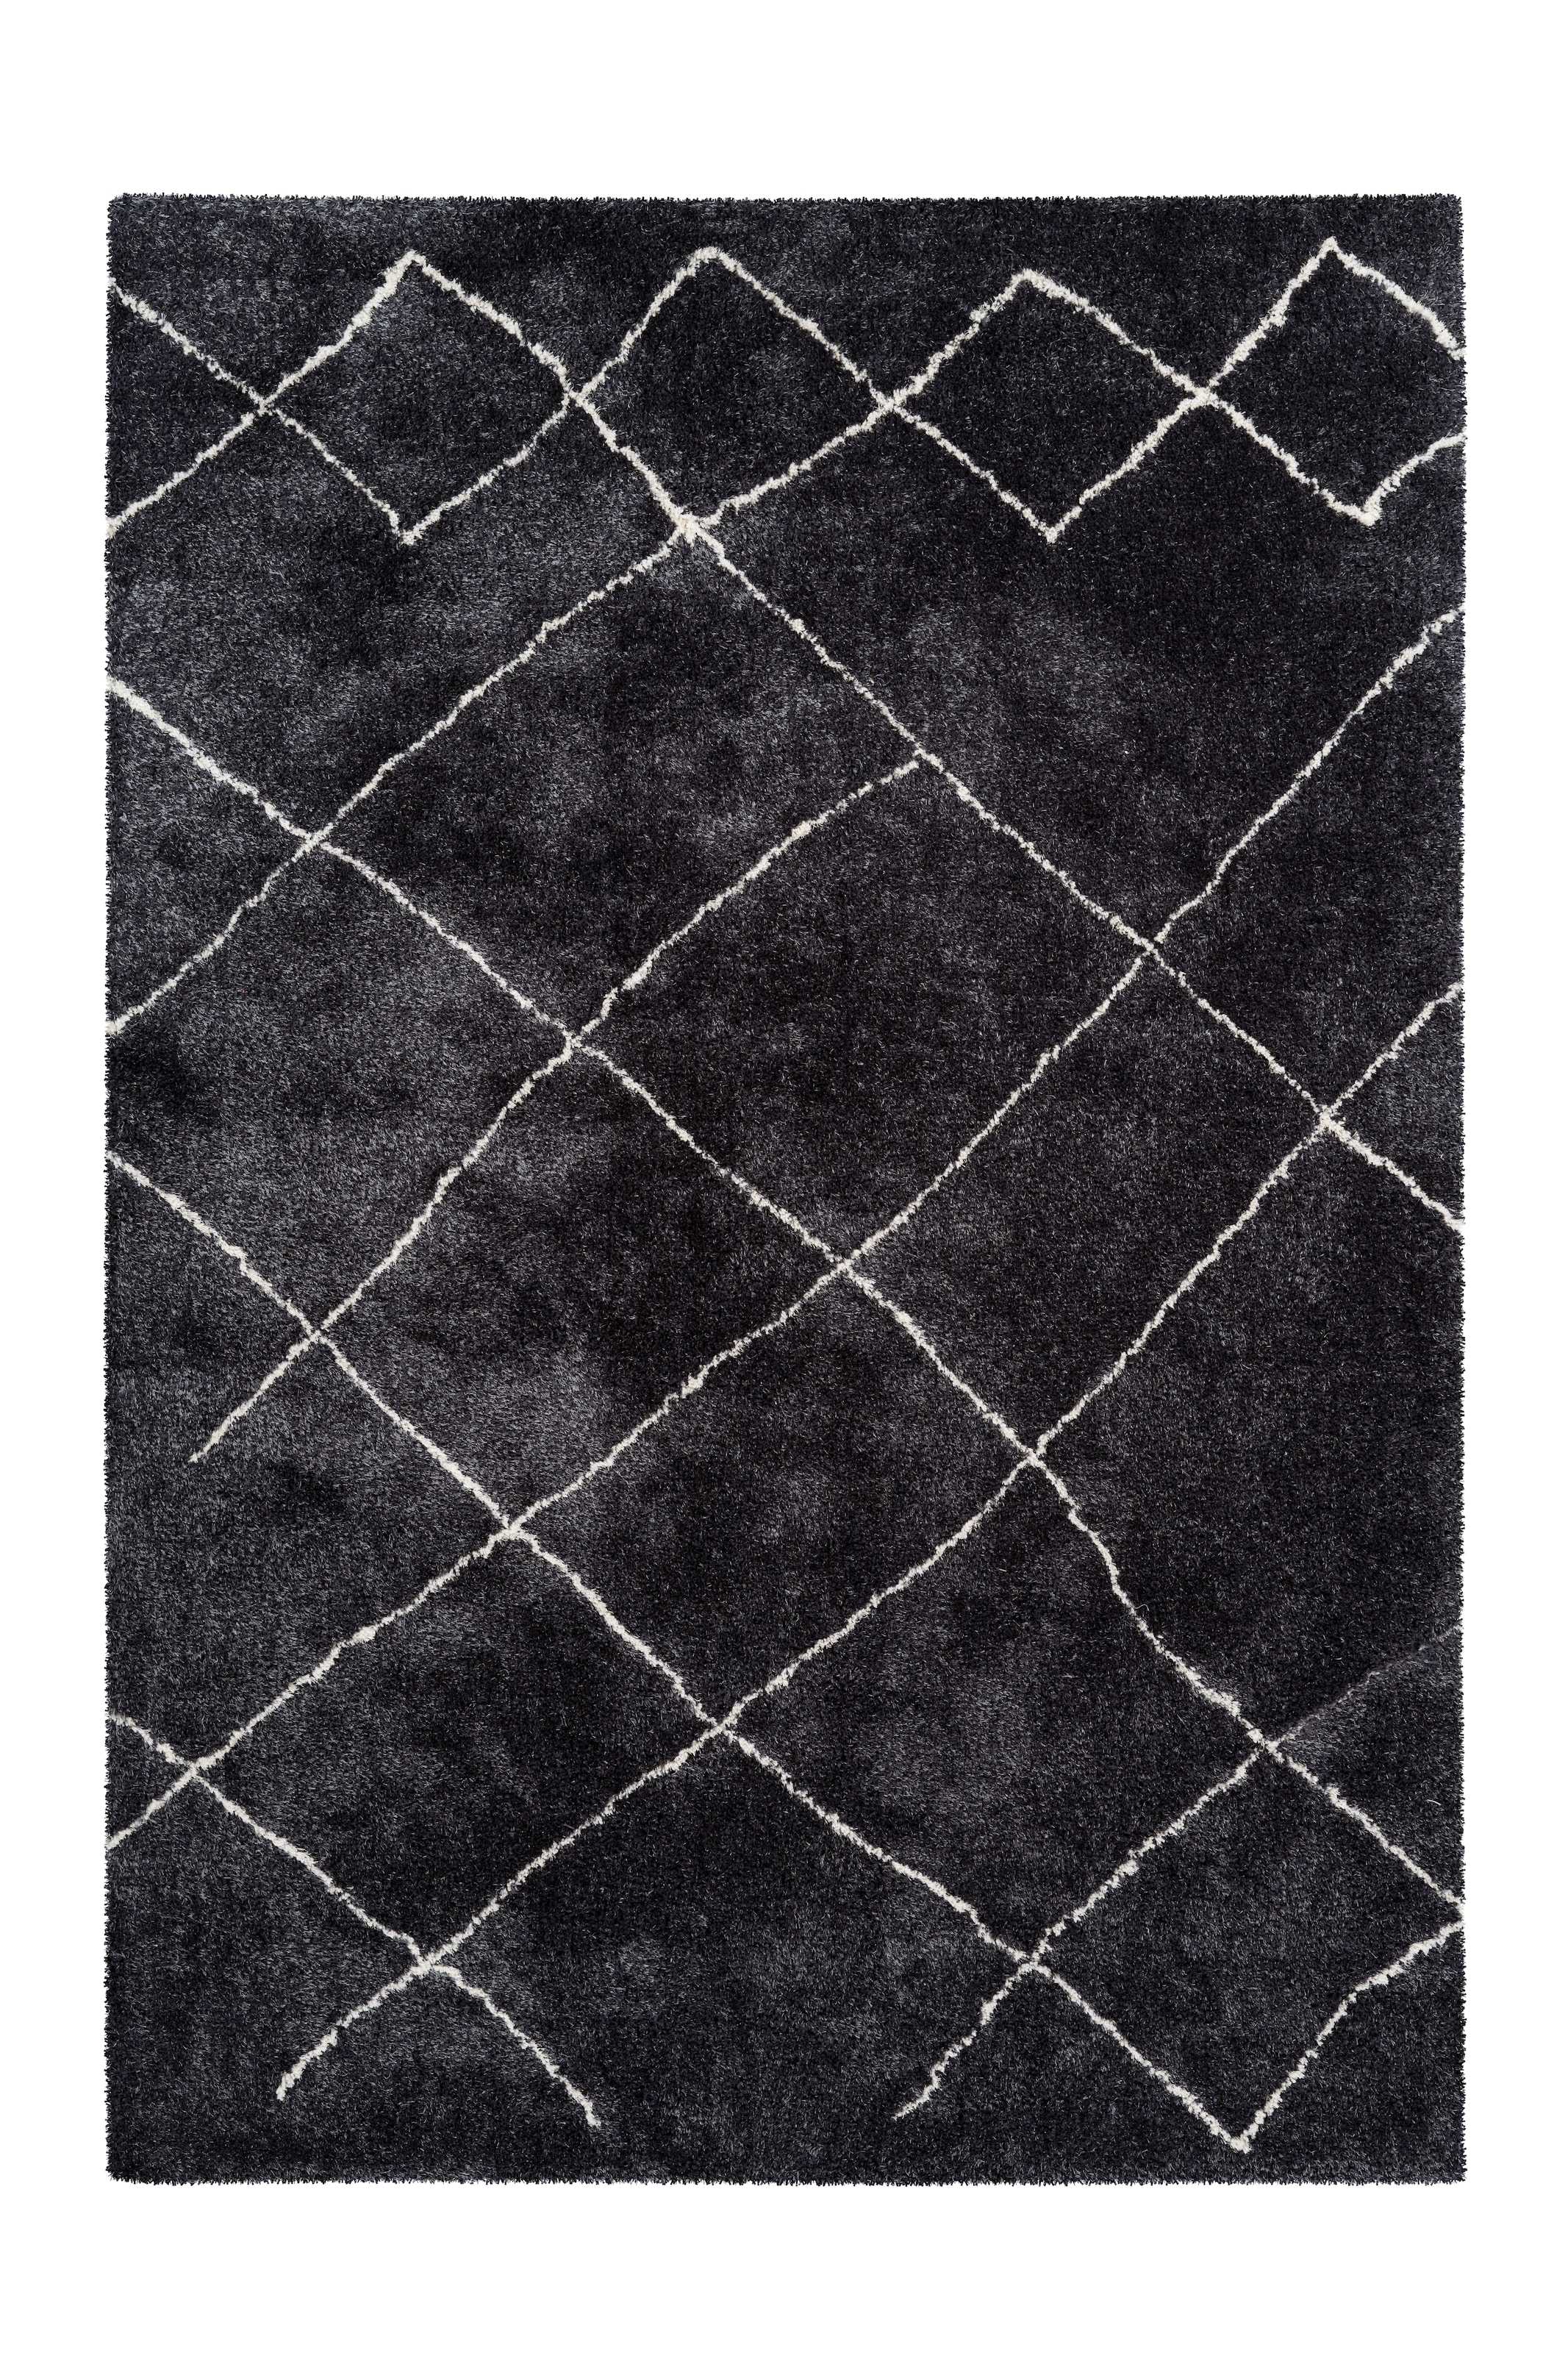 me gusta Teppich »Orlando 525«, rechteckig, Attraktives Muster, Retrolook,Baumwollrücken, Fußbodenheizung geeignet